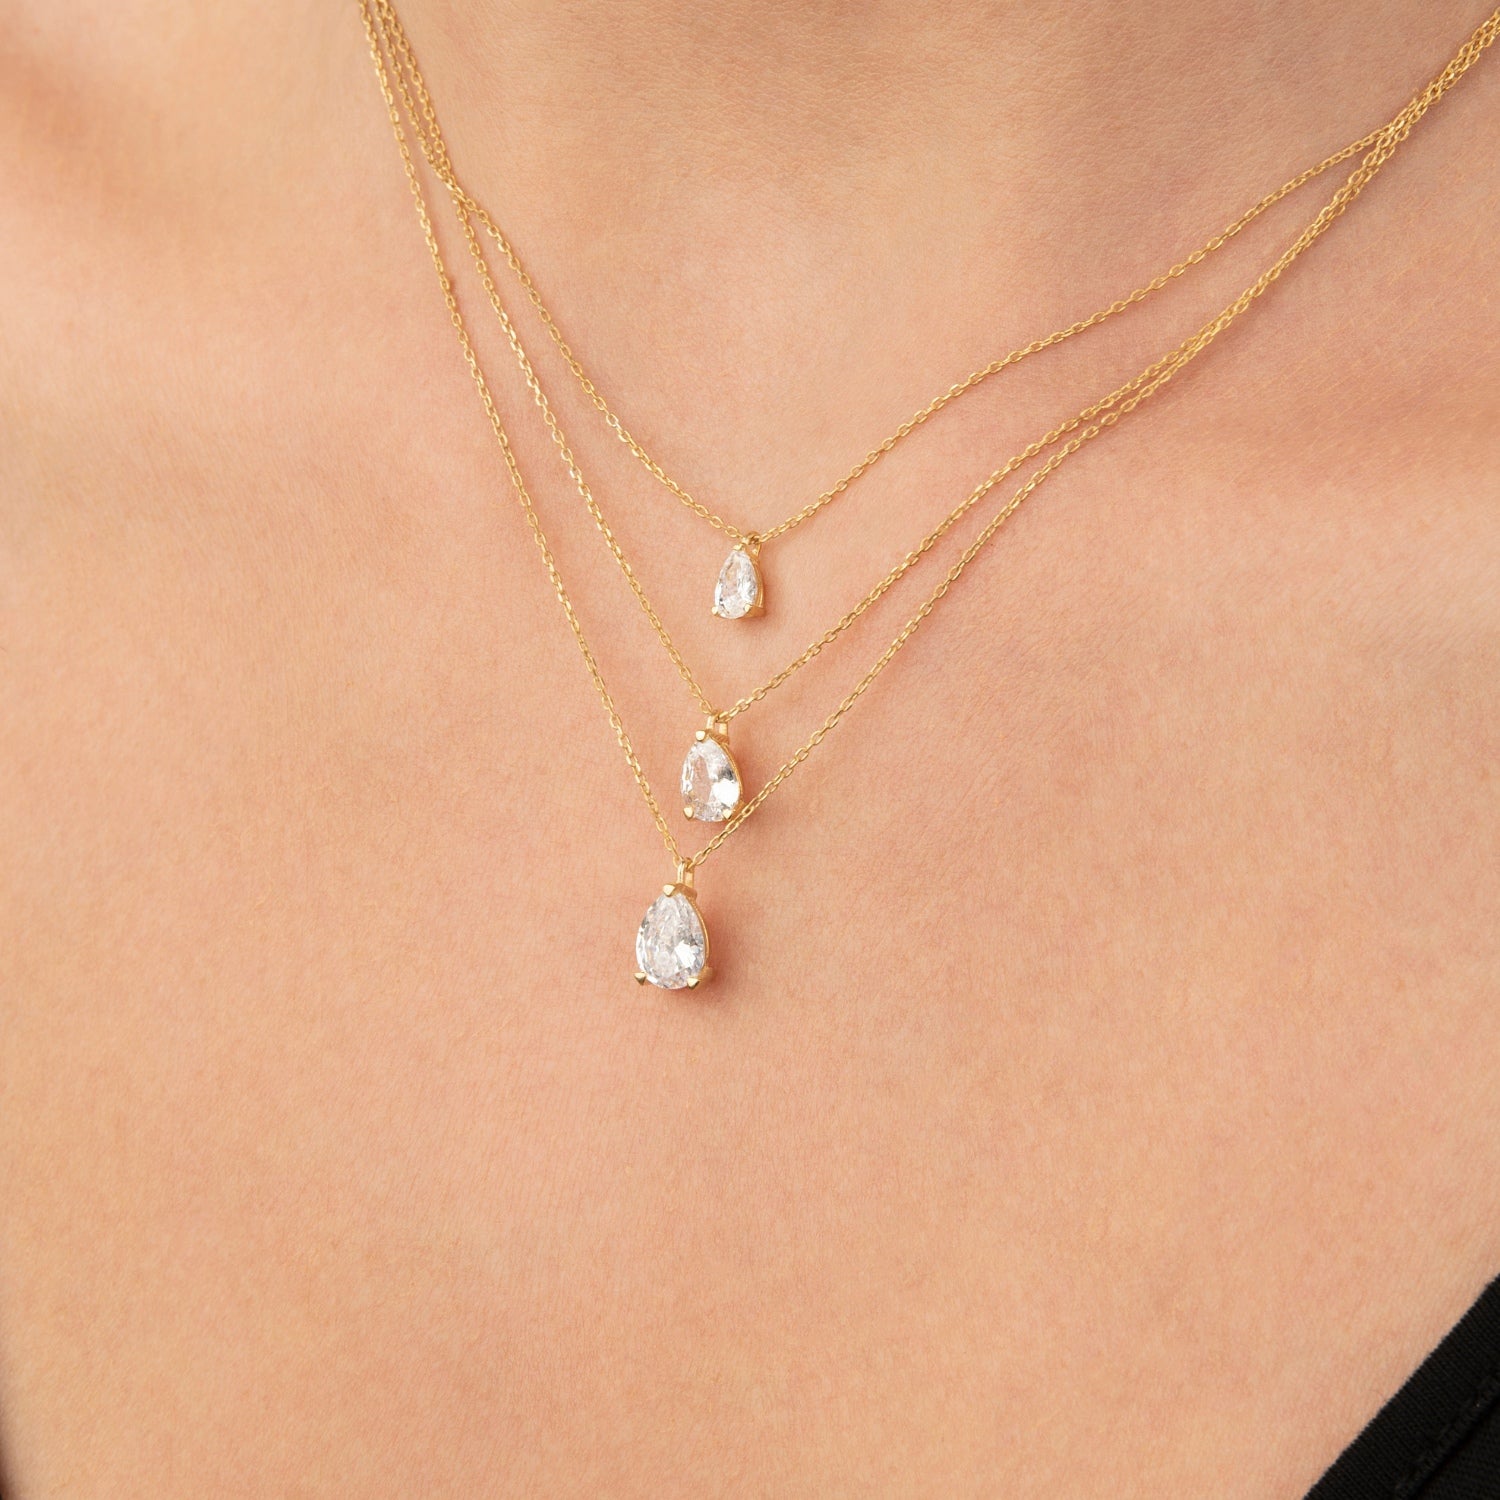 Pear Cut Diamond Solitaire Necklace